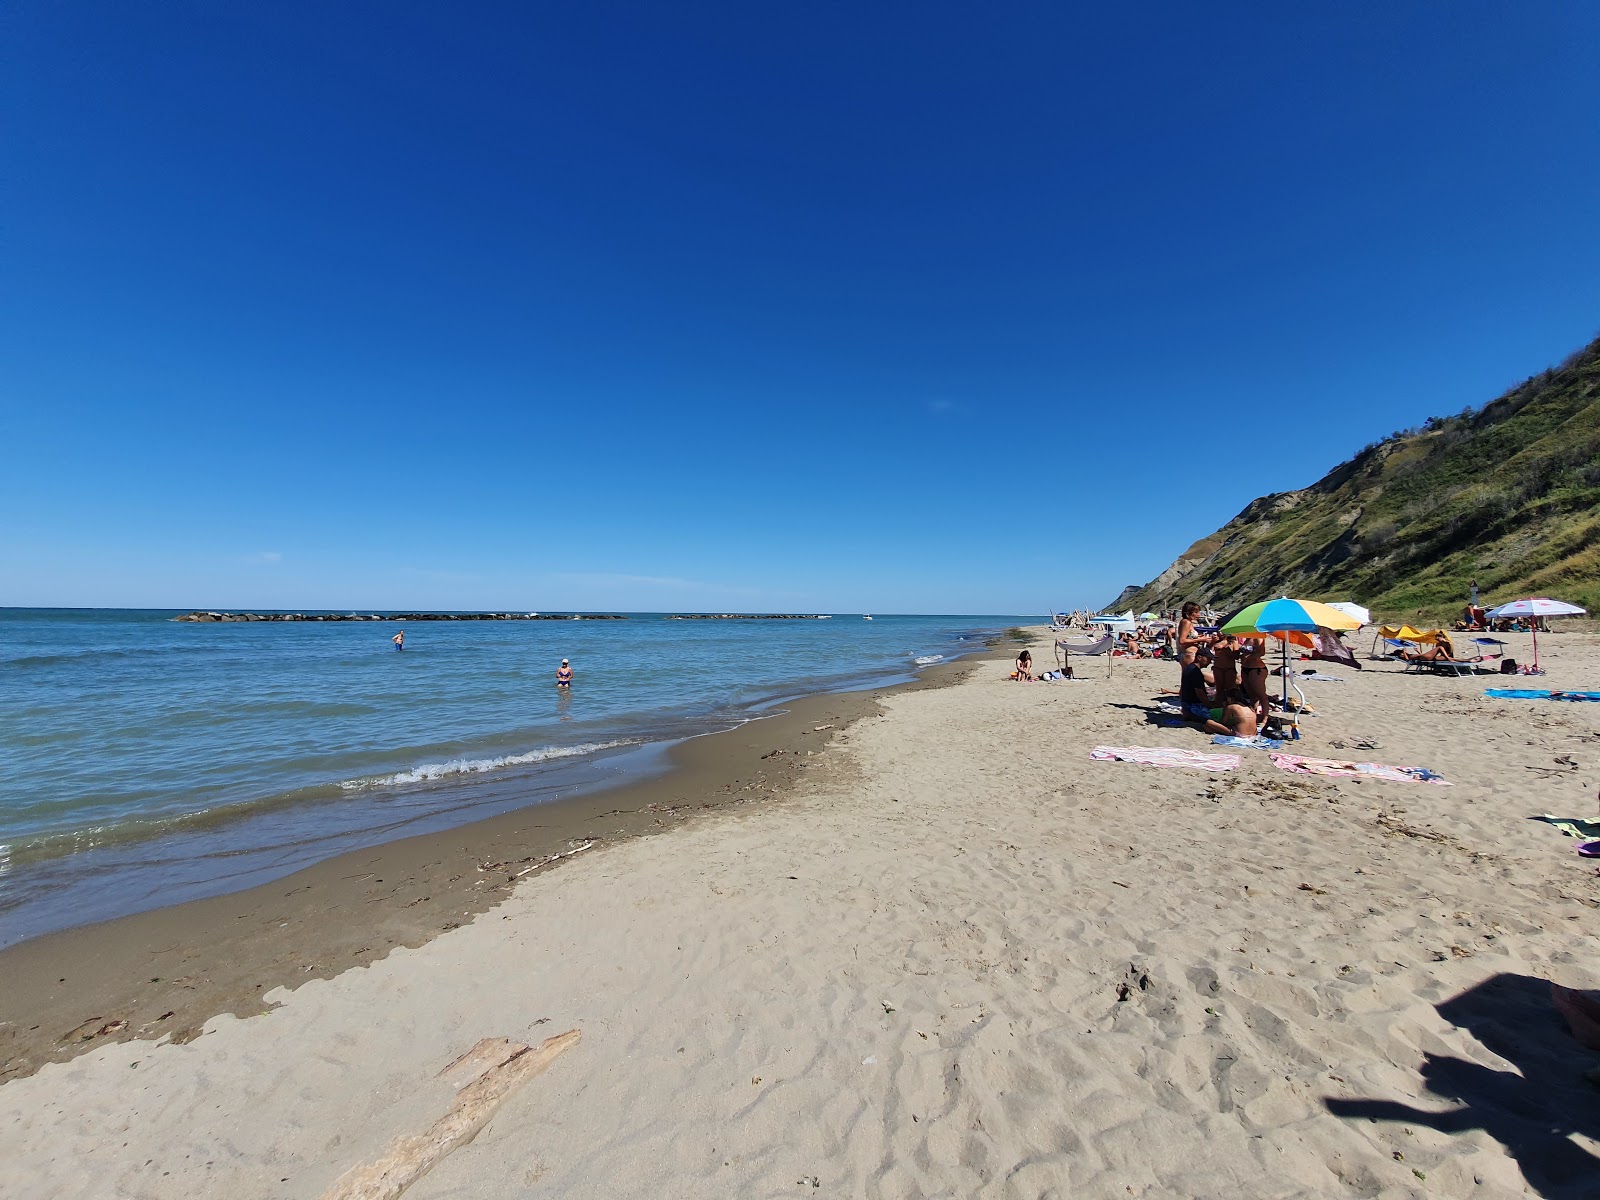 Foto af Spiaggia di Fiorenzuola di Focara med turkis vand overflade